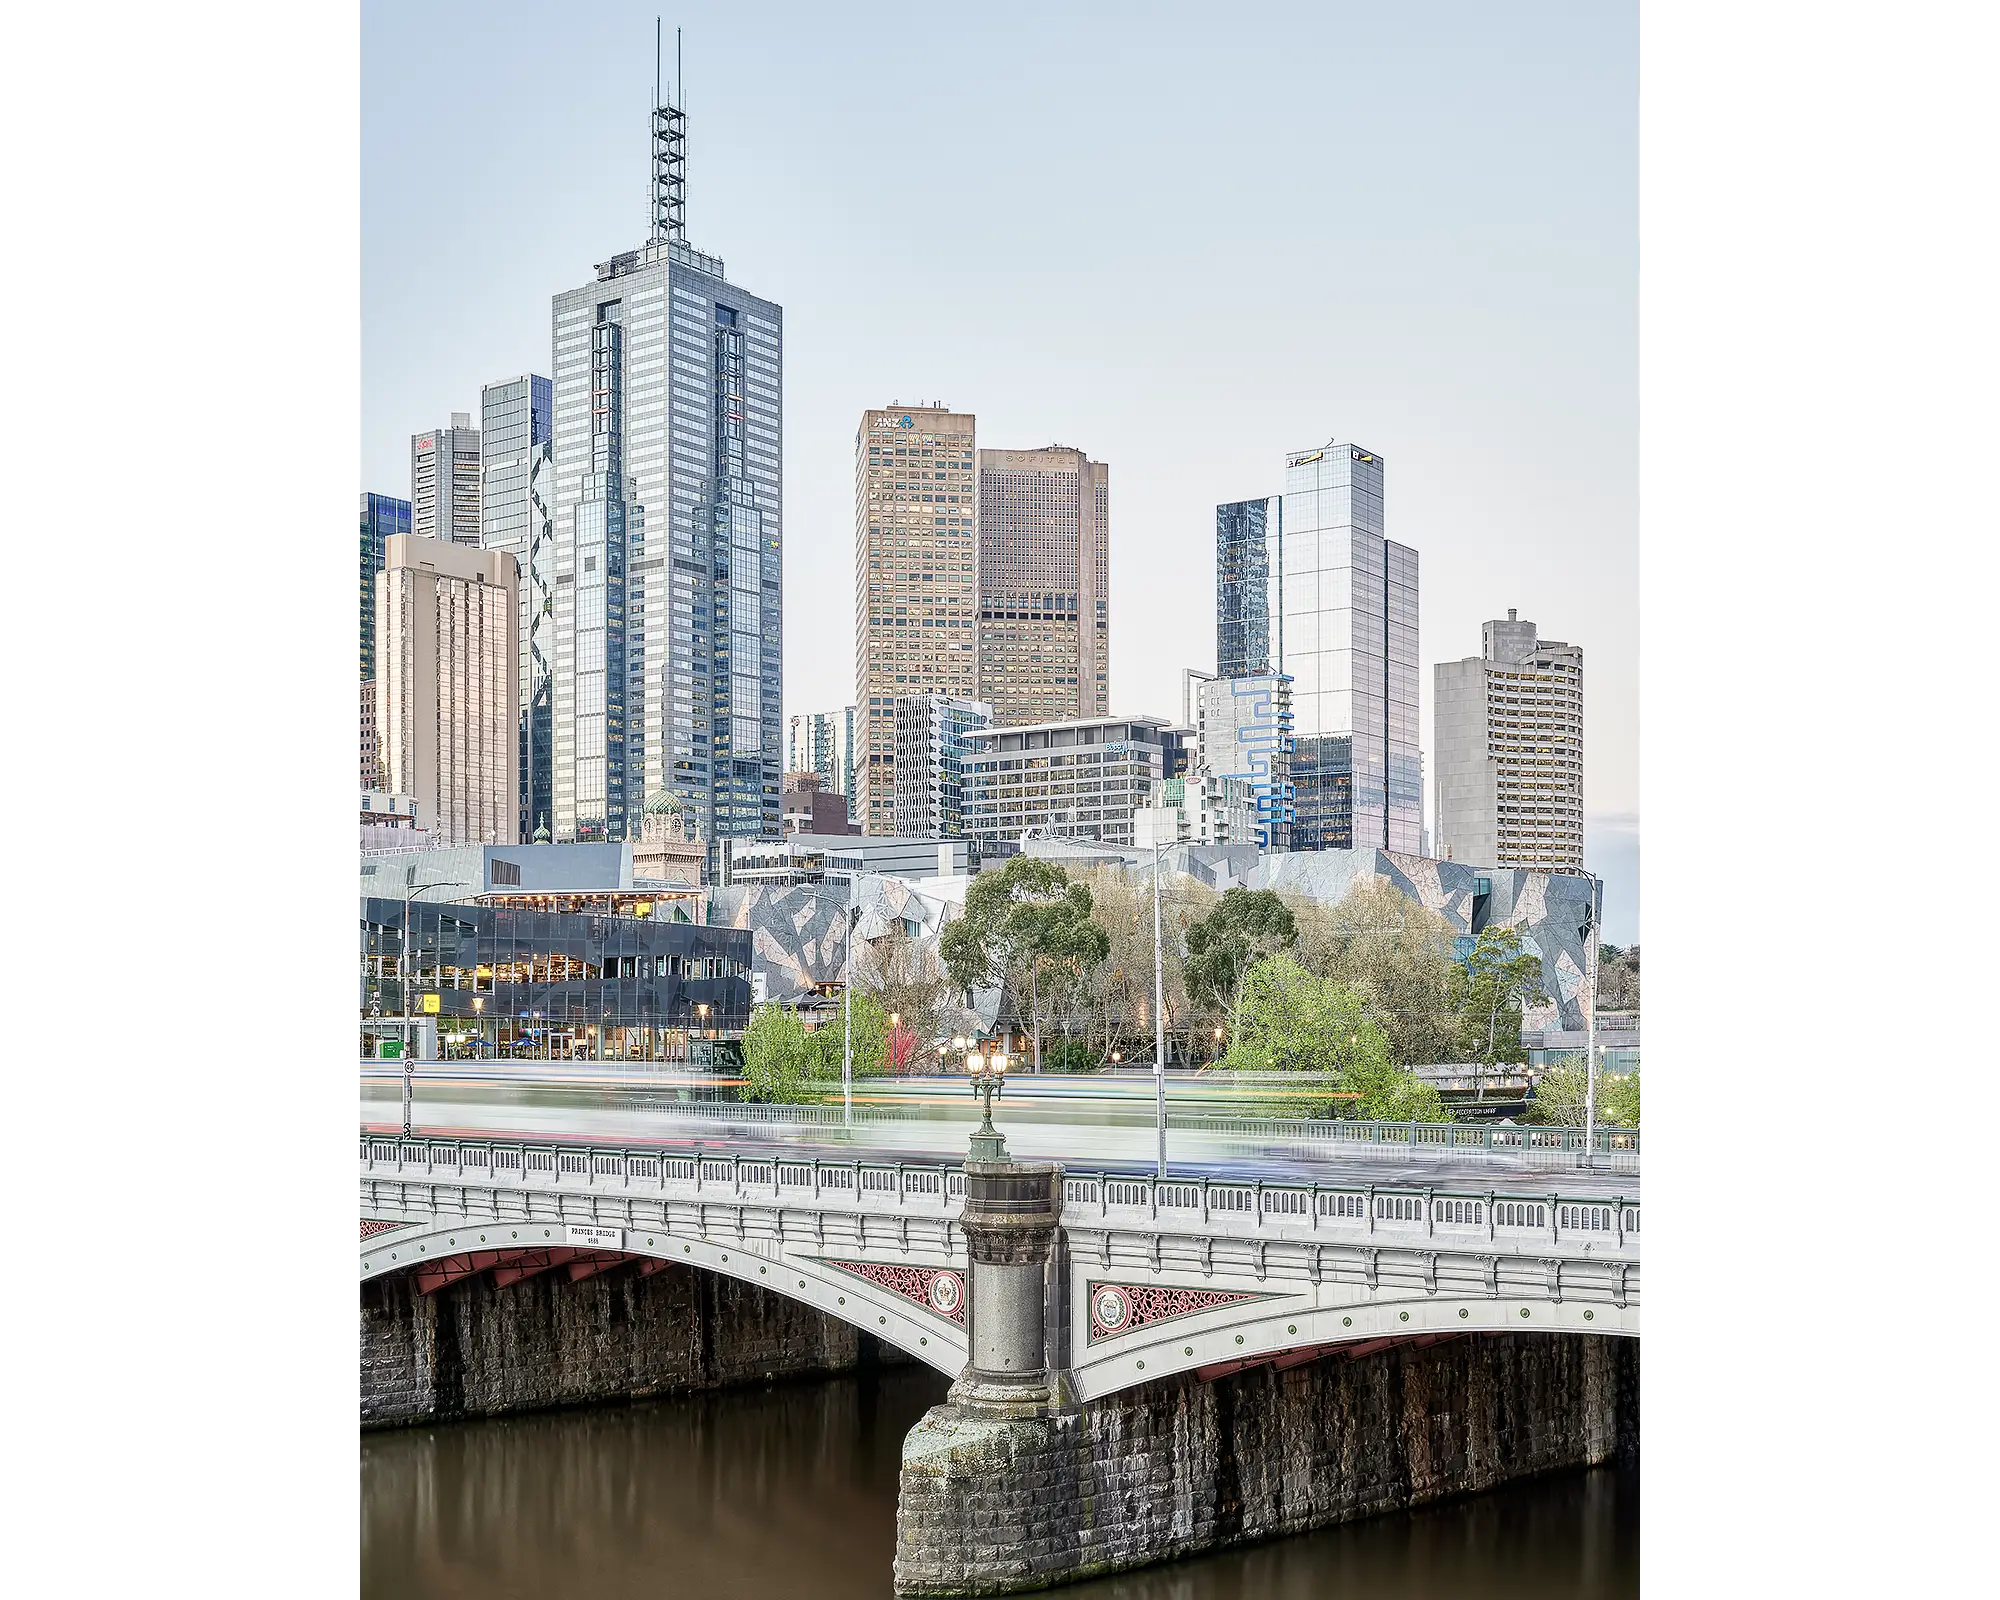 Top End - Melbourne CBD and Yarra River, Victoria.